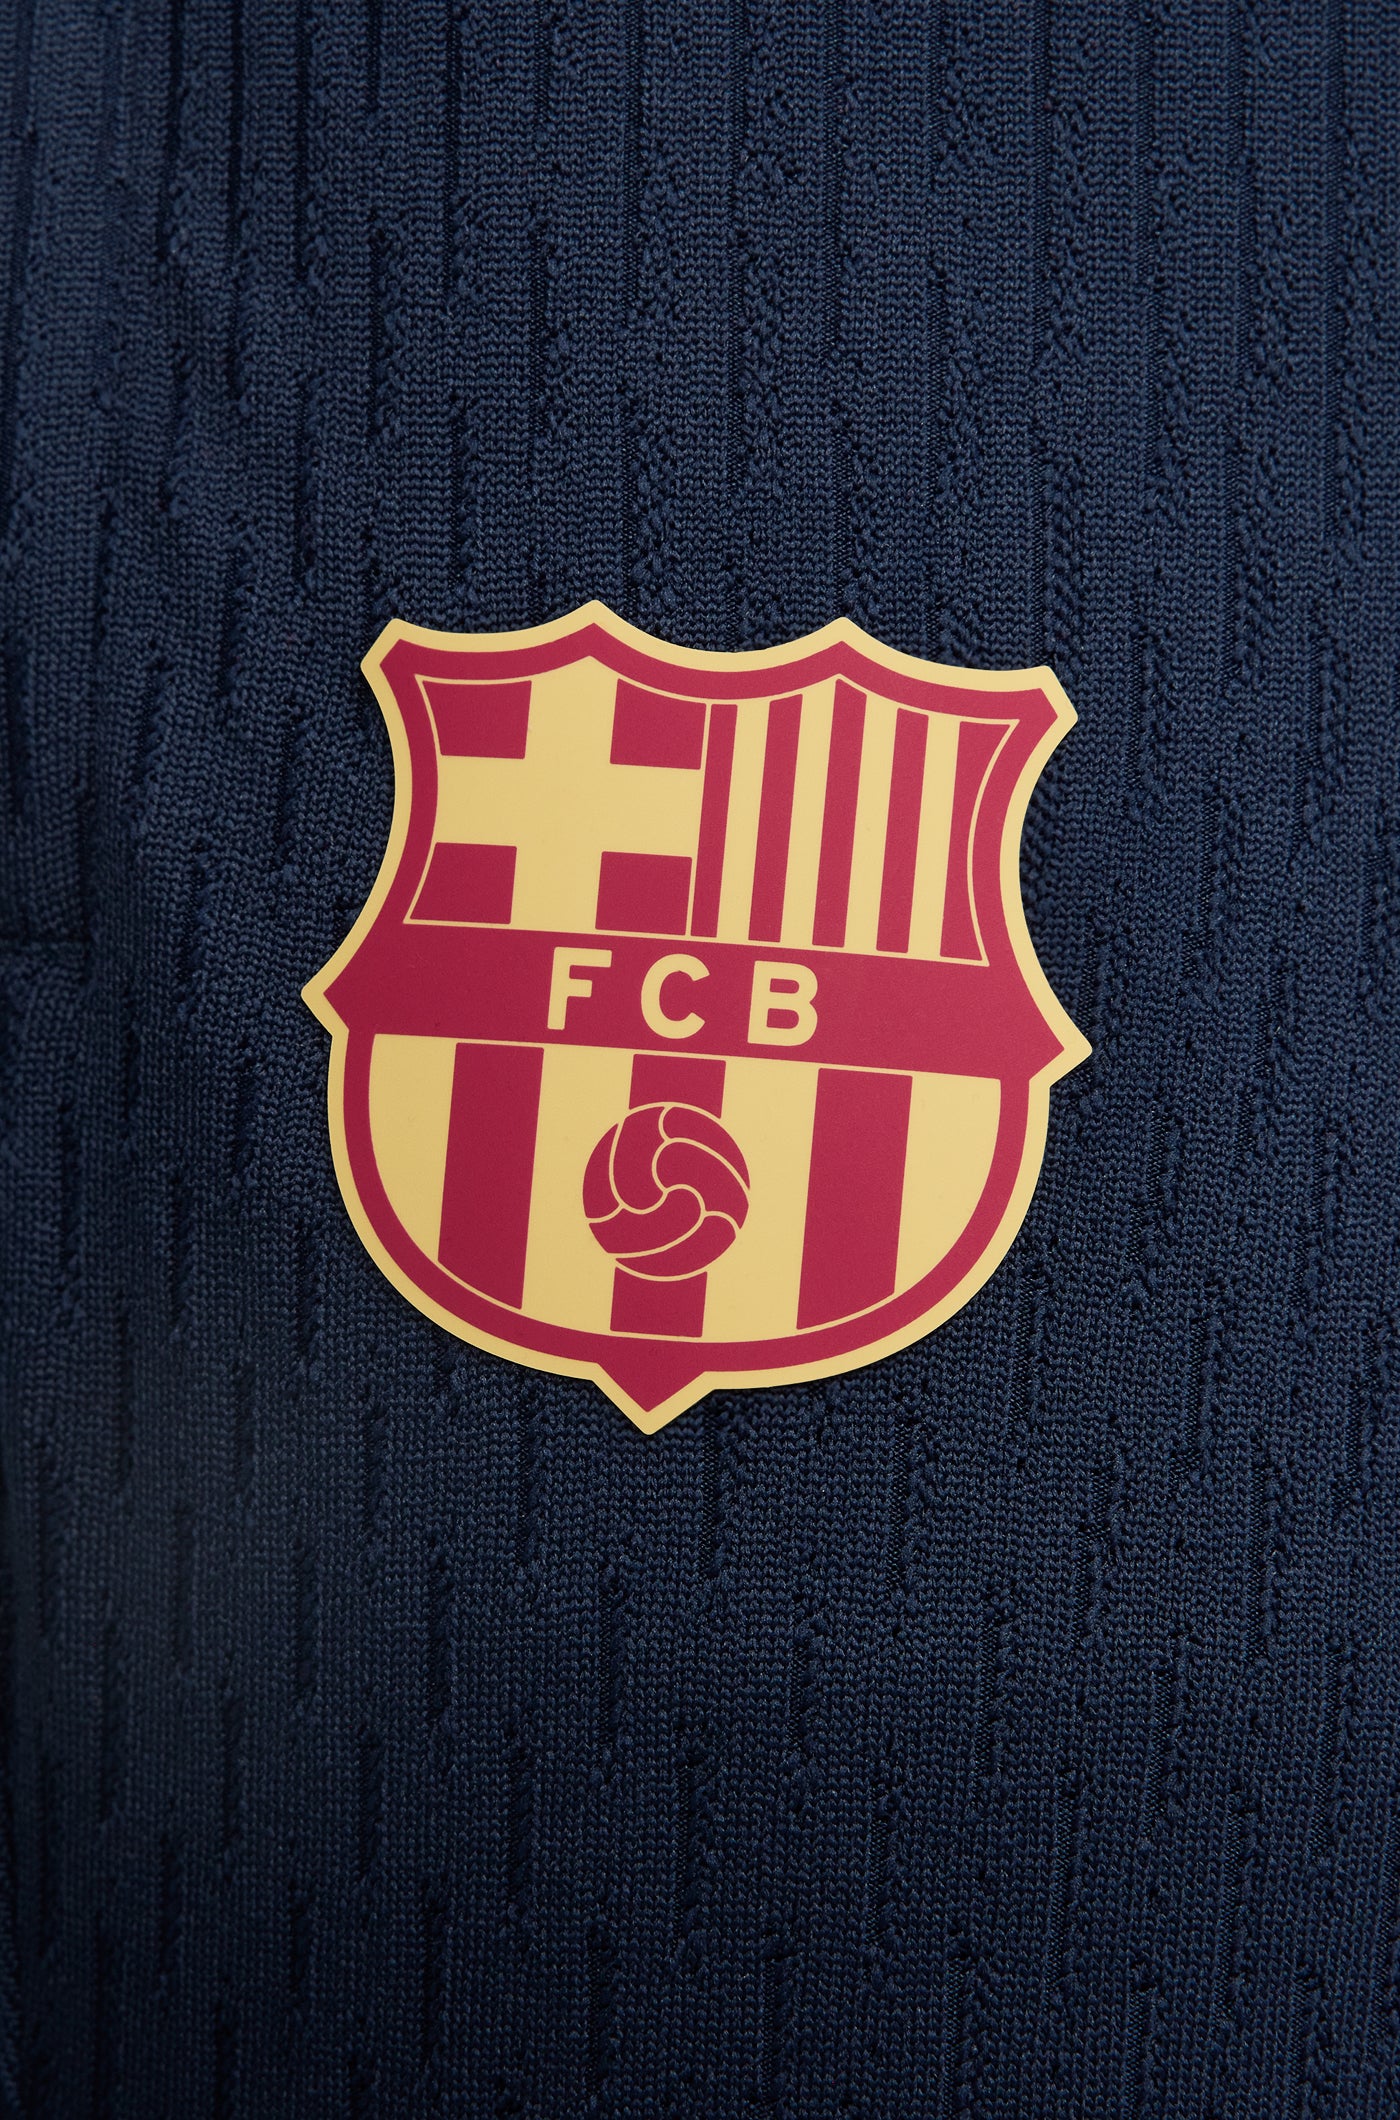 FC Barcelona obsidian Training Pants 23/24 - Player's Edition